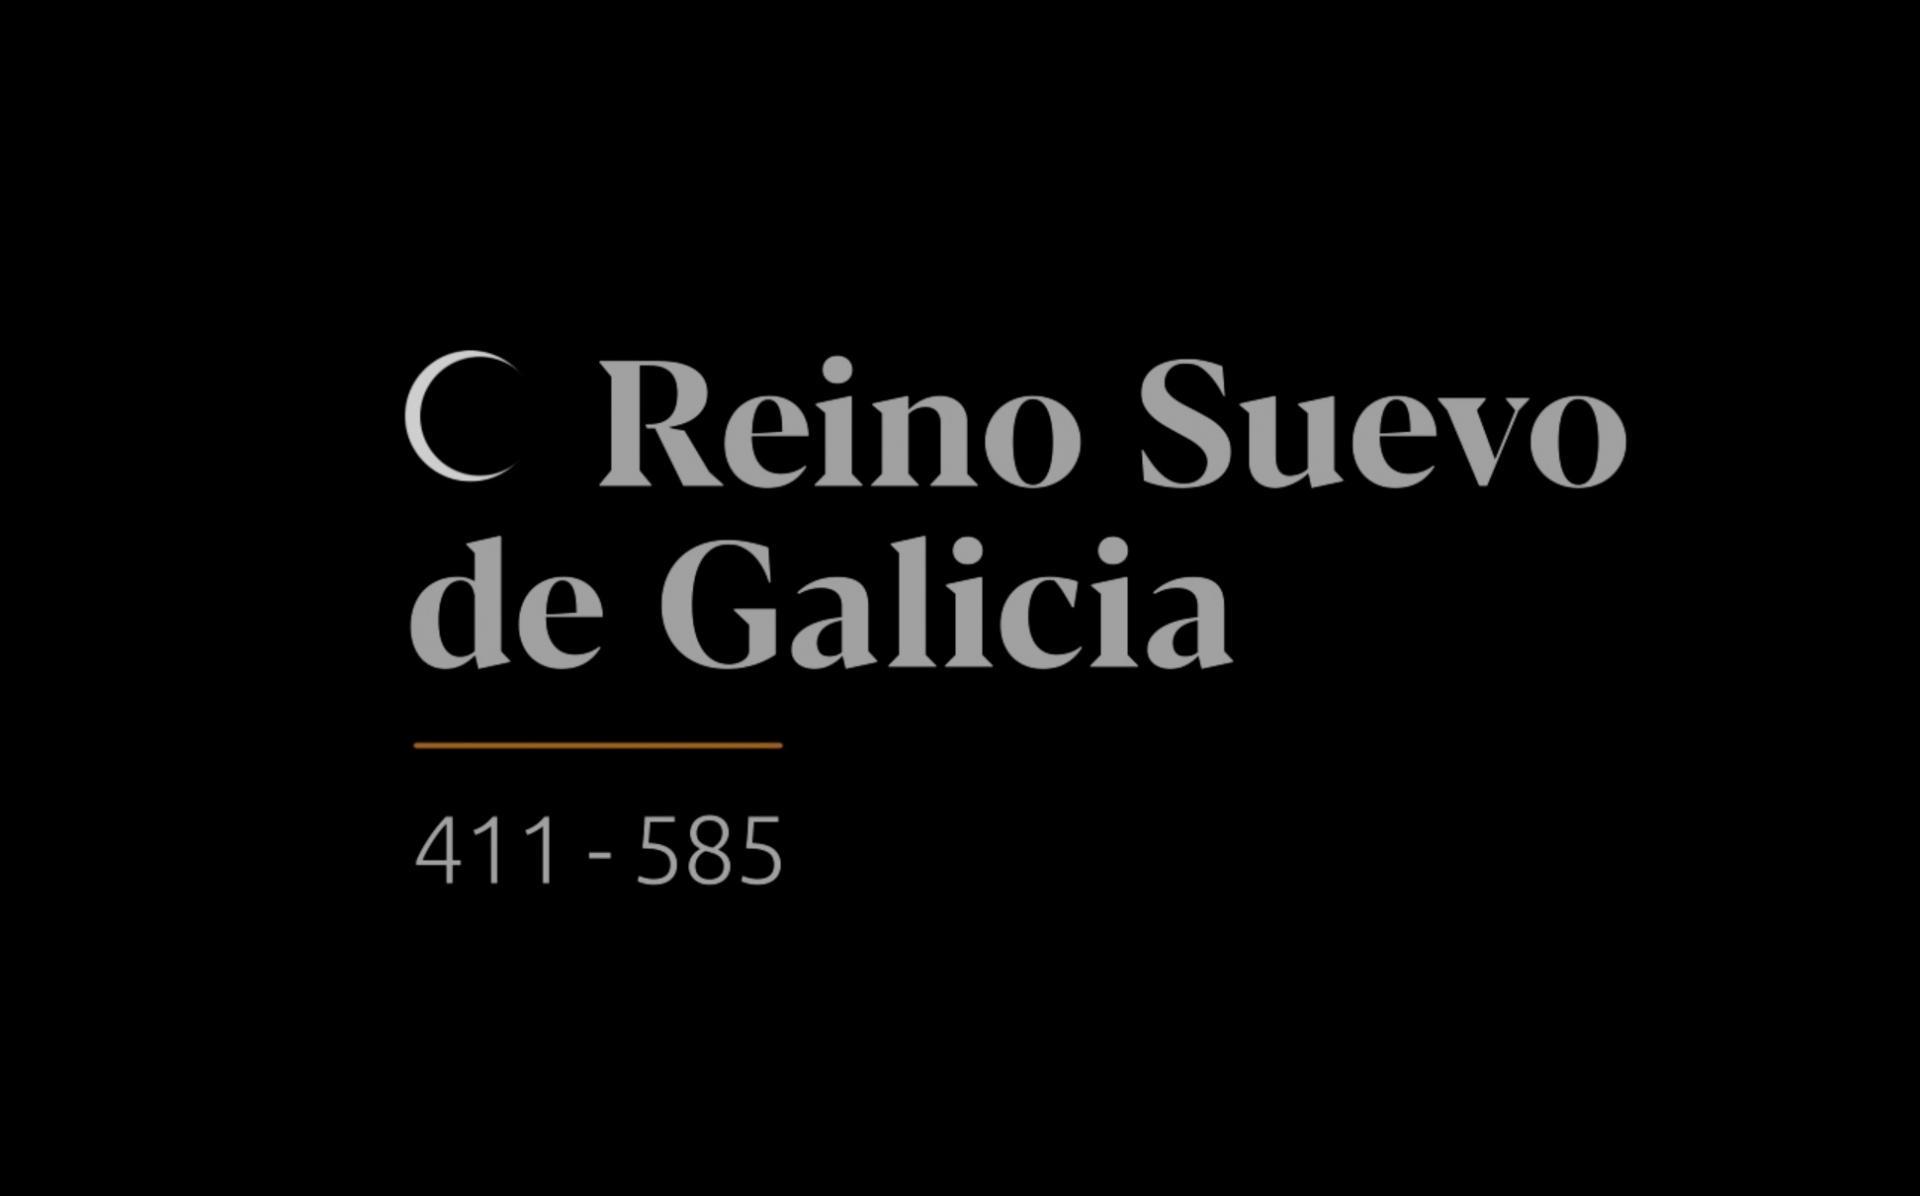 O reino suevo de Galicia